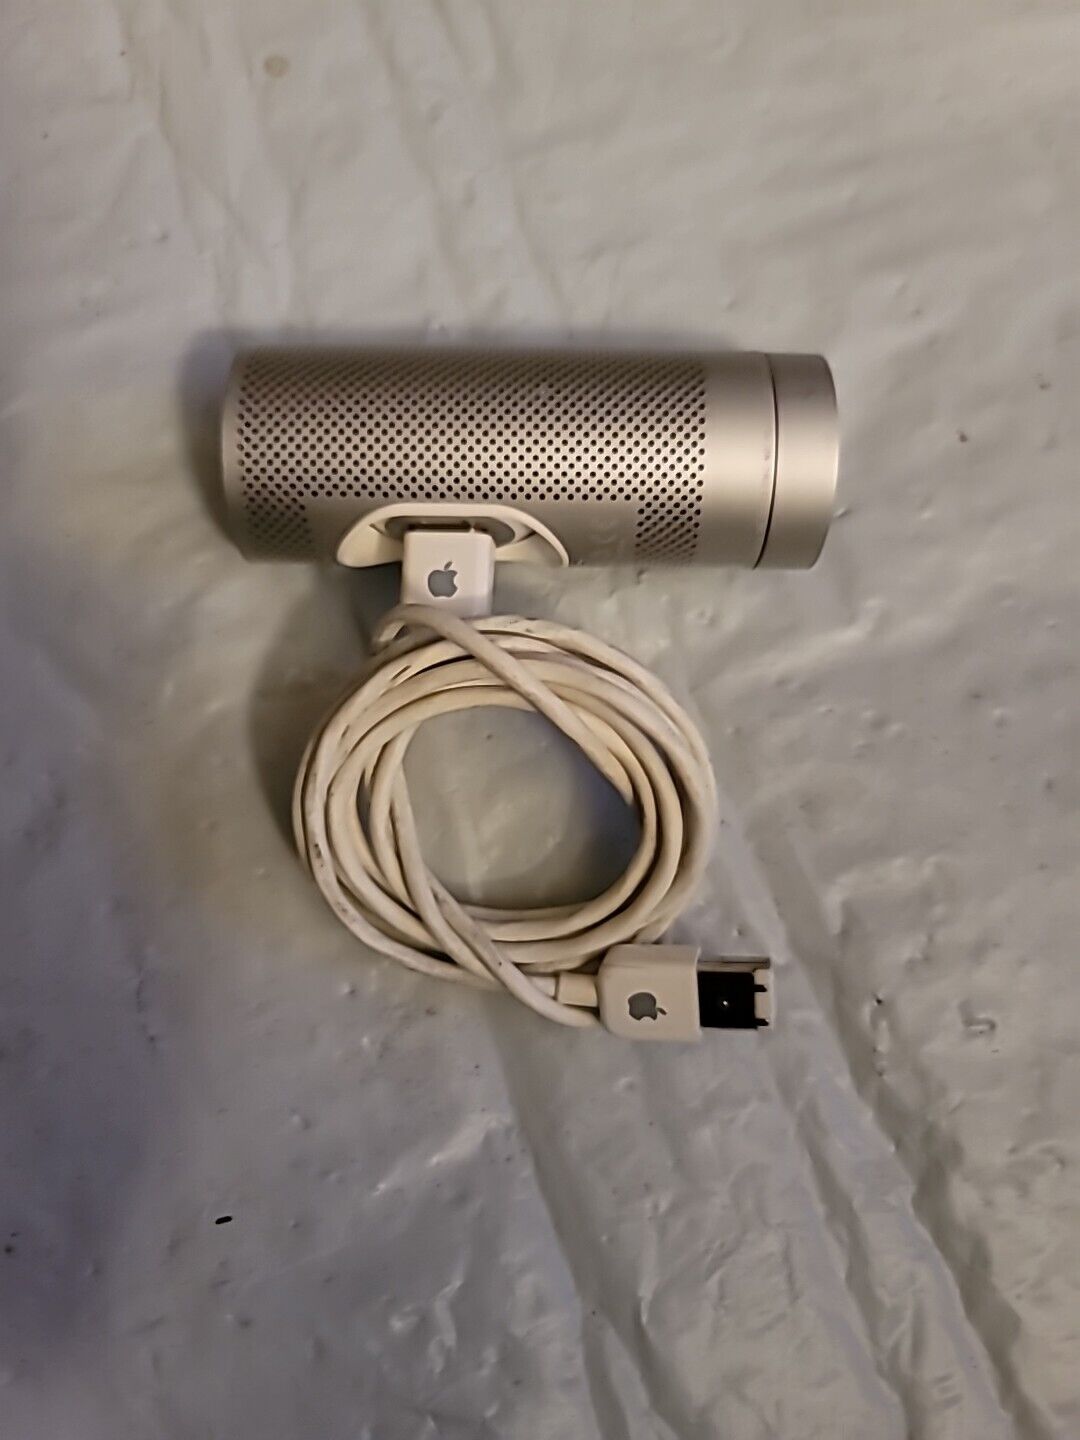 Apple iSight Firewire Camera A1023 - 2003, For Mac 